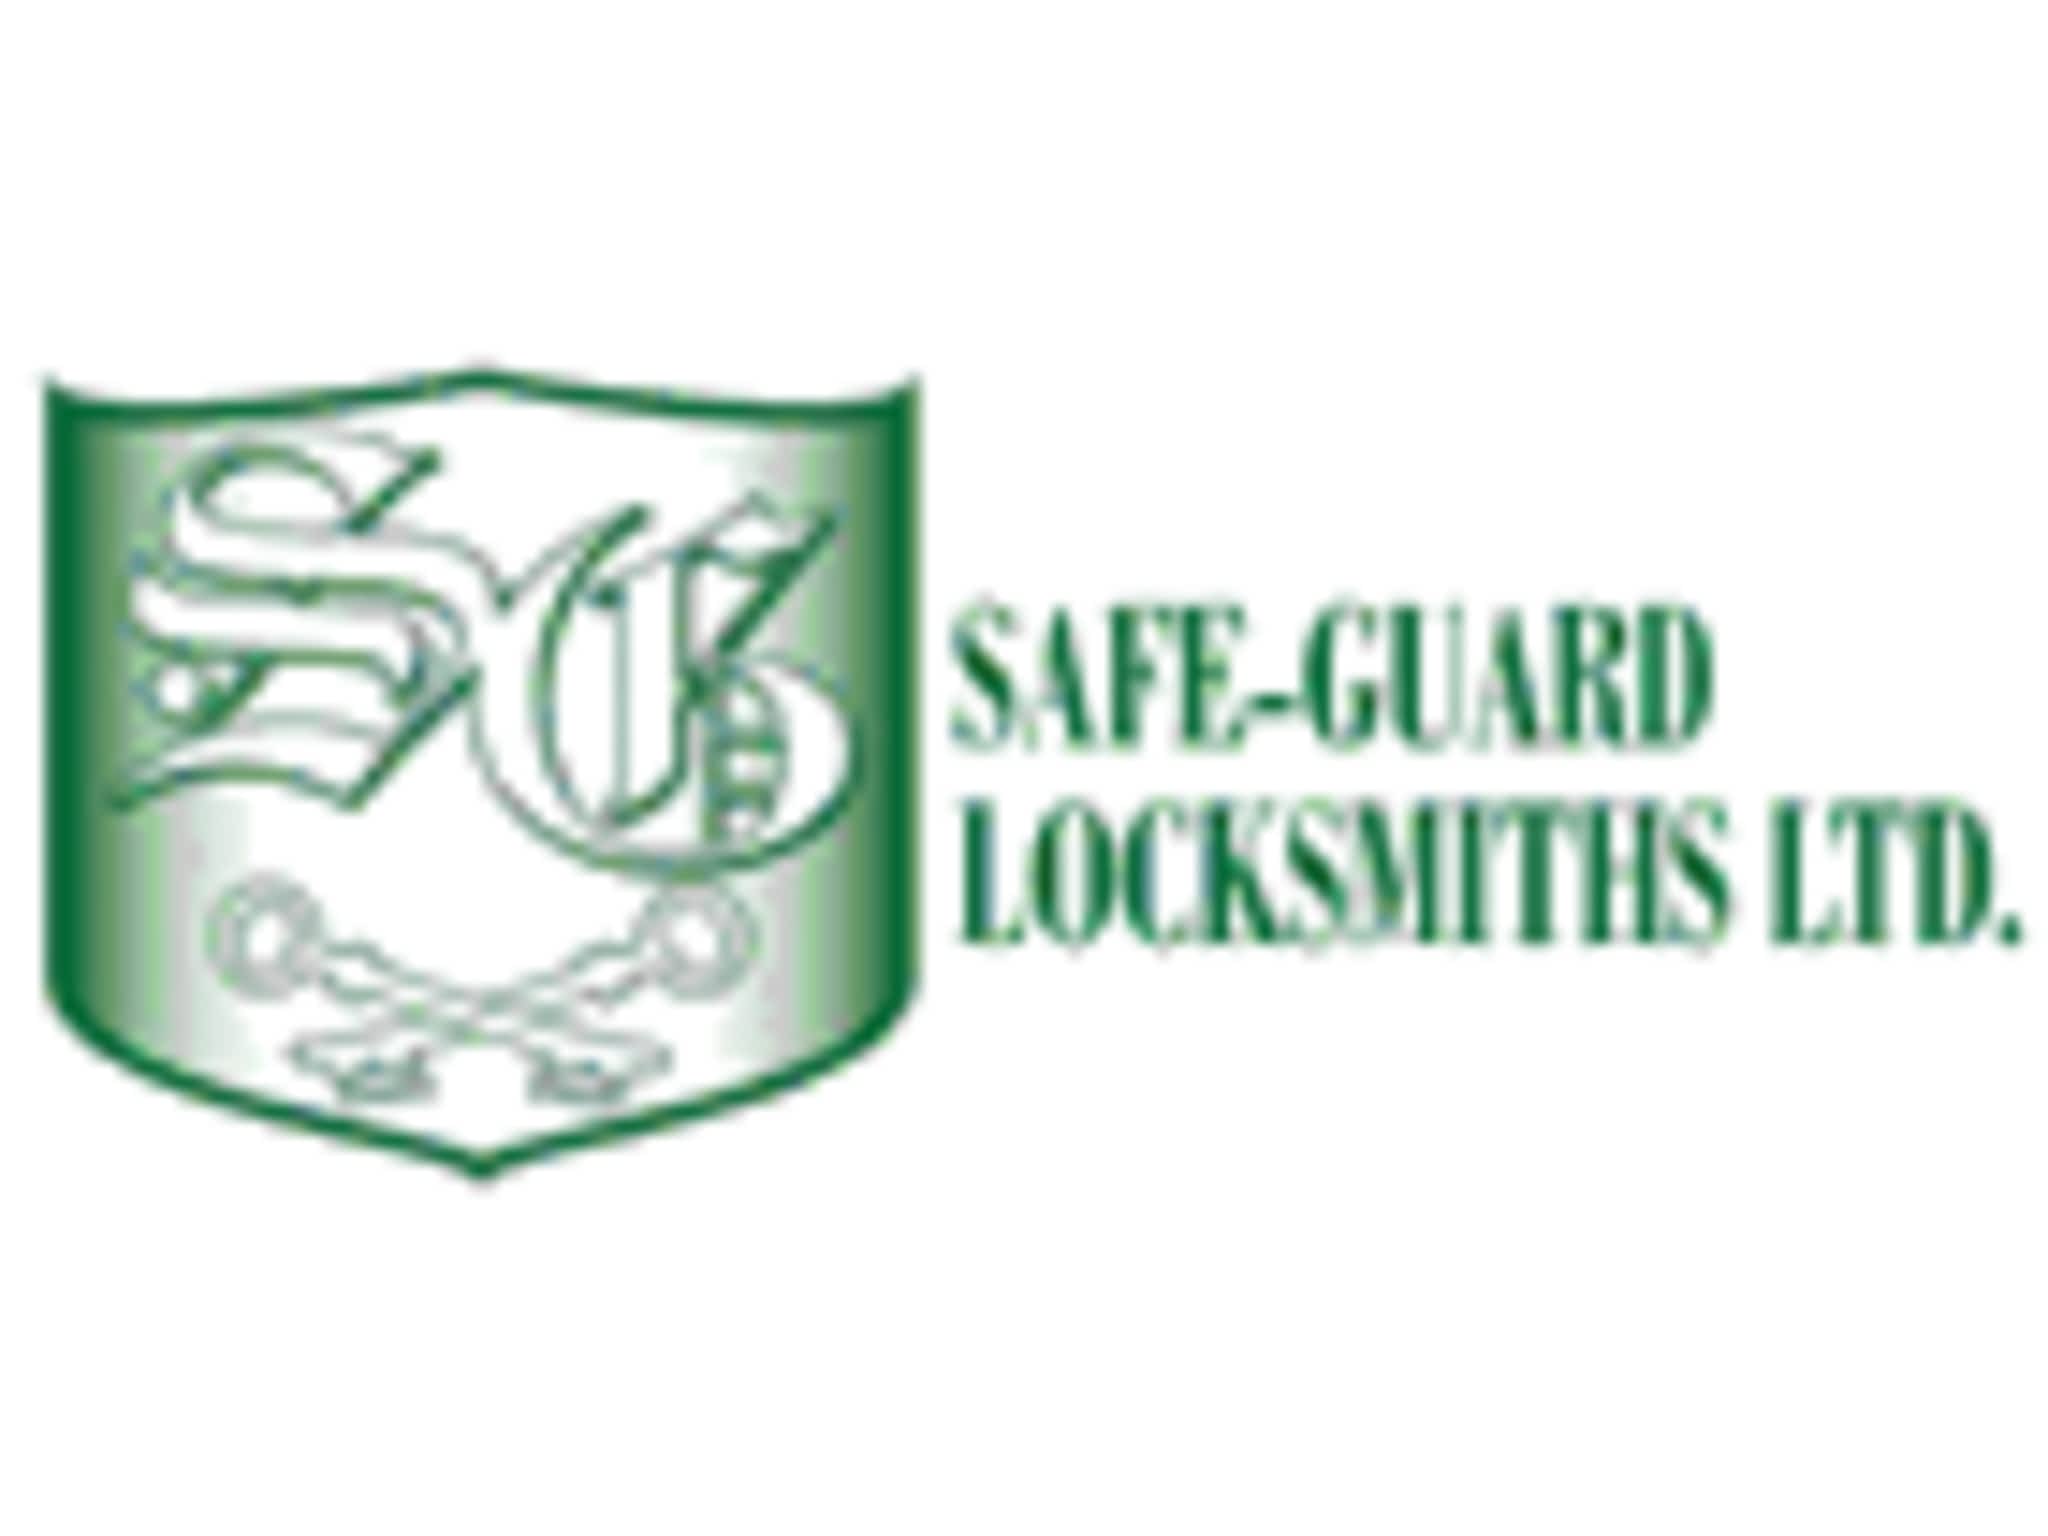 photo Safe Guard Locksmiths Ltd